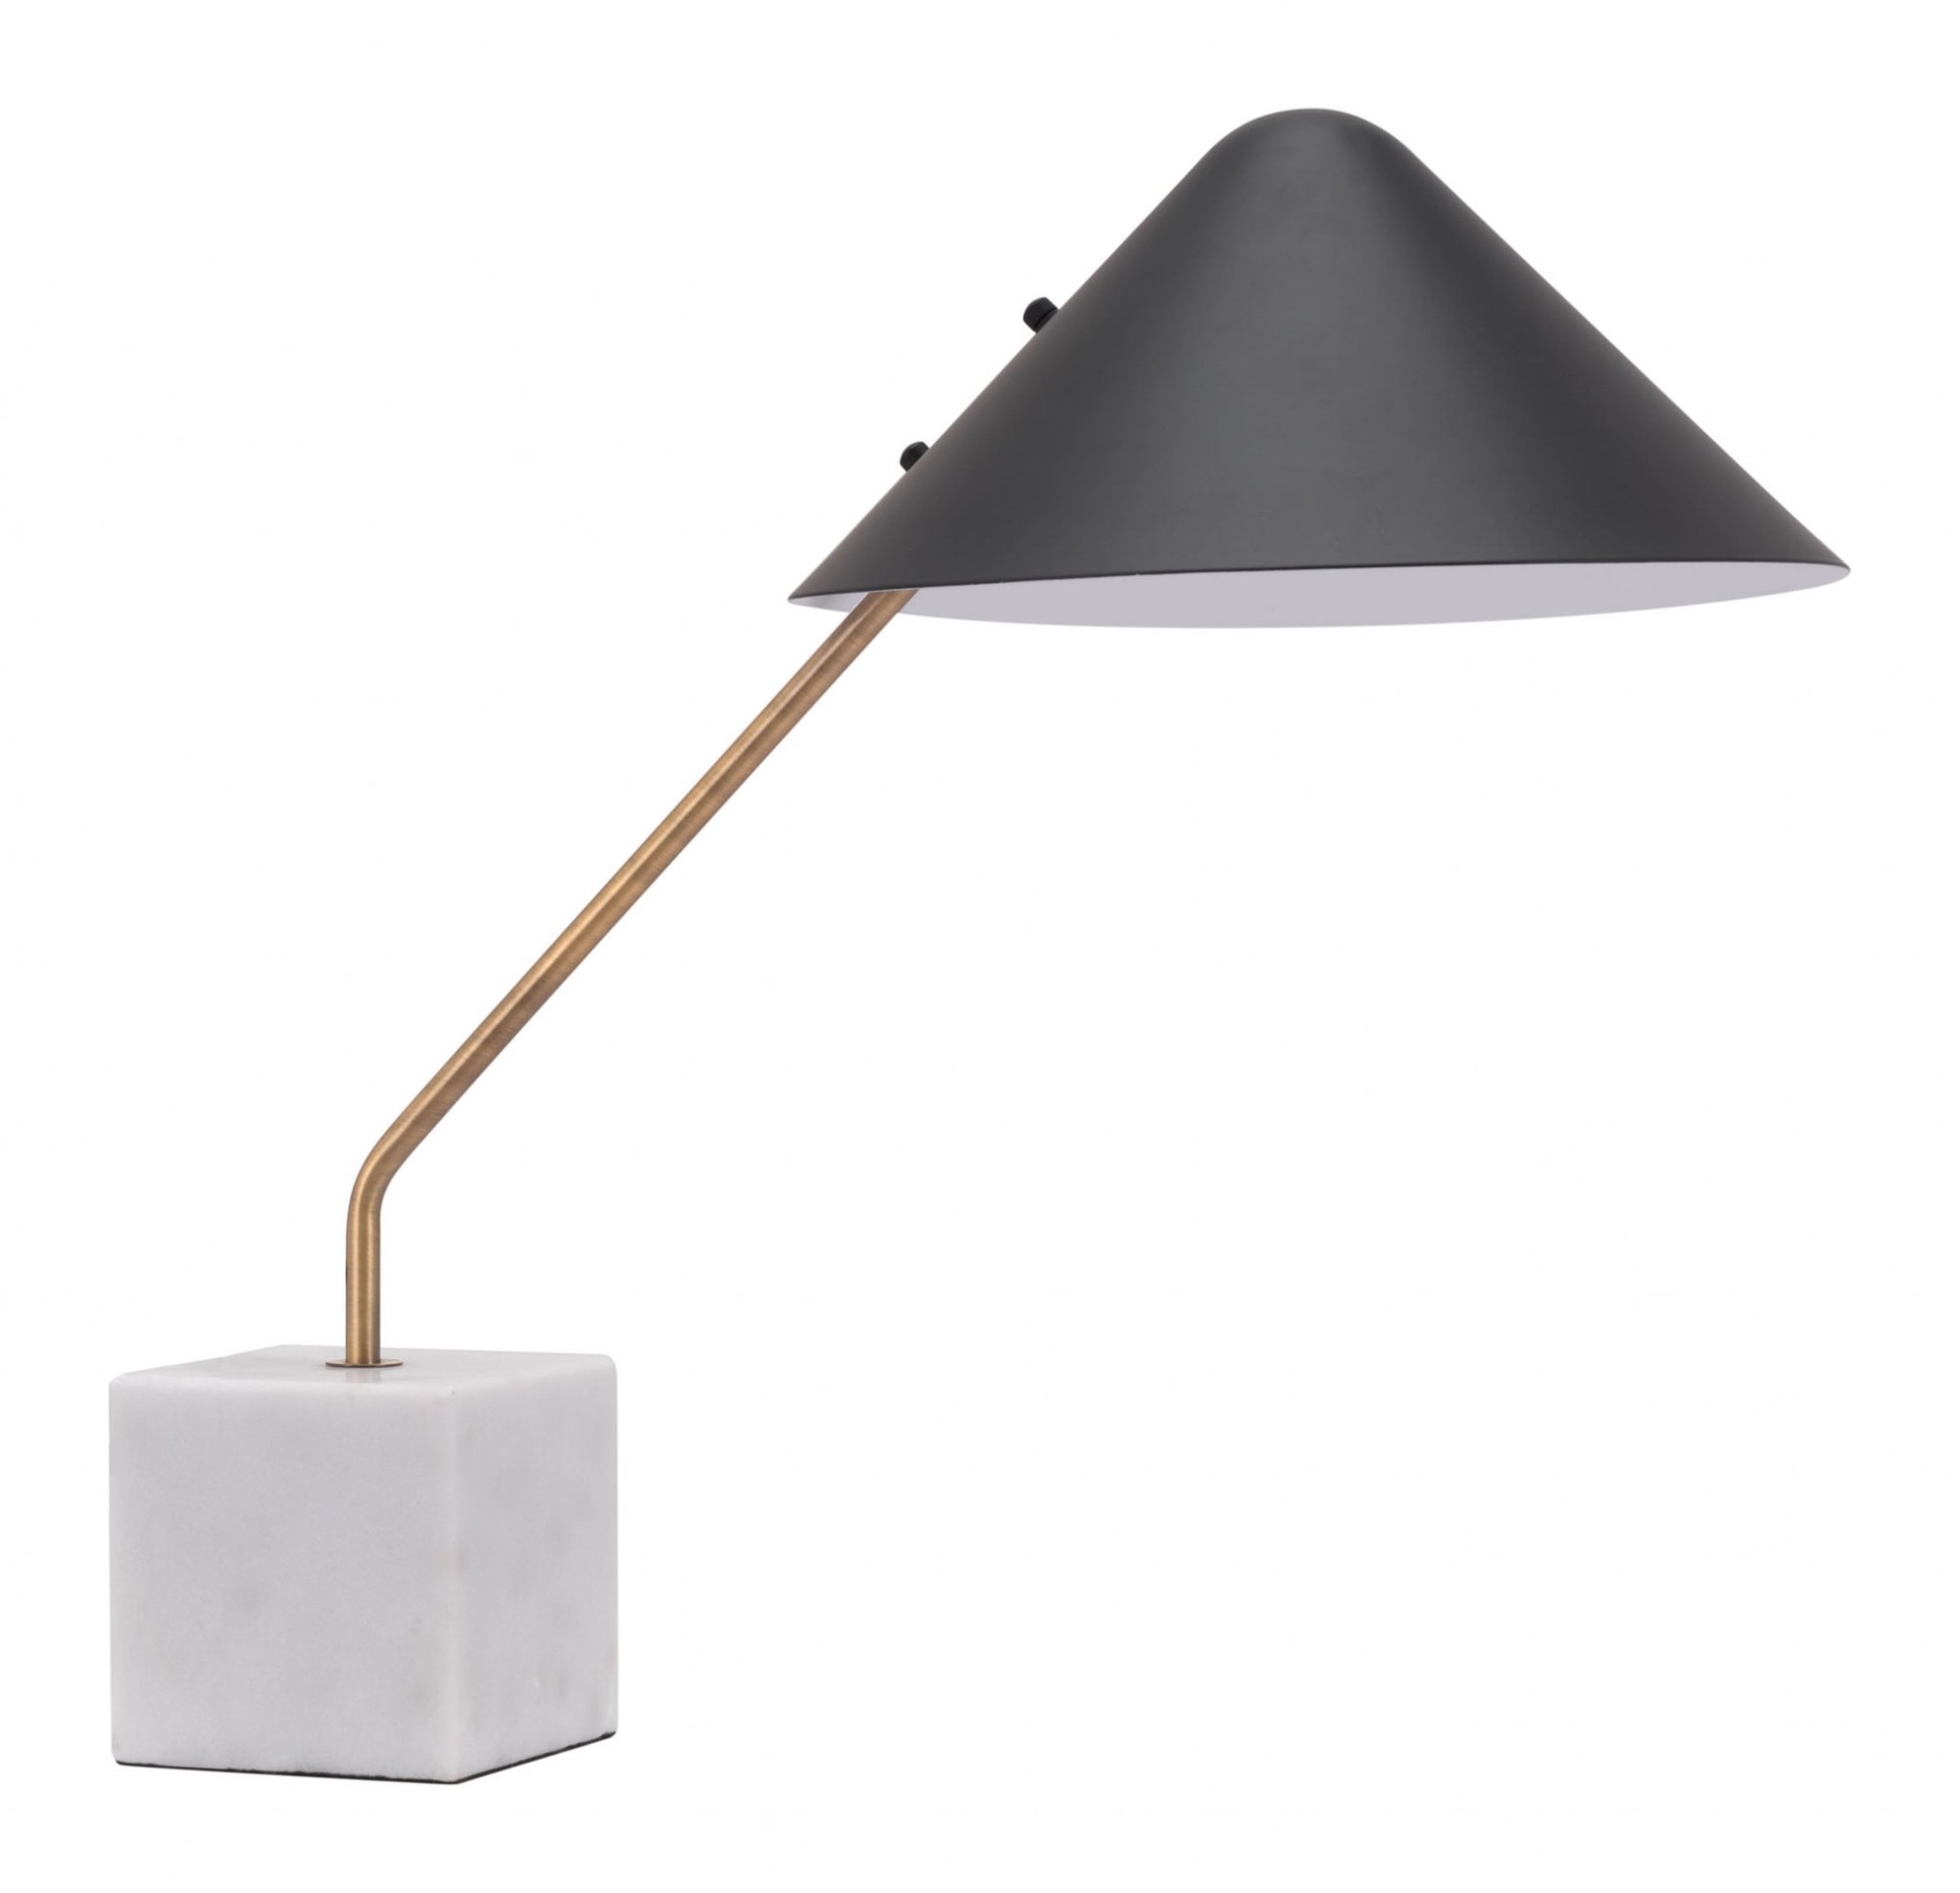 20.9" x 12.6" x 20.5" Black, Steel & Marble, Table Lamp